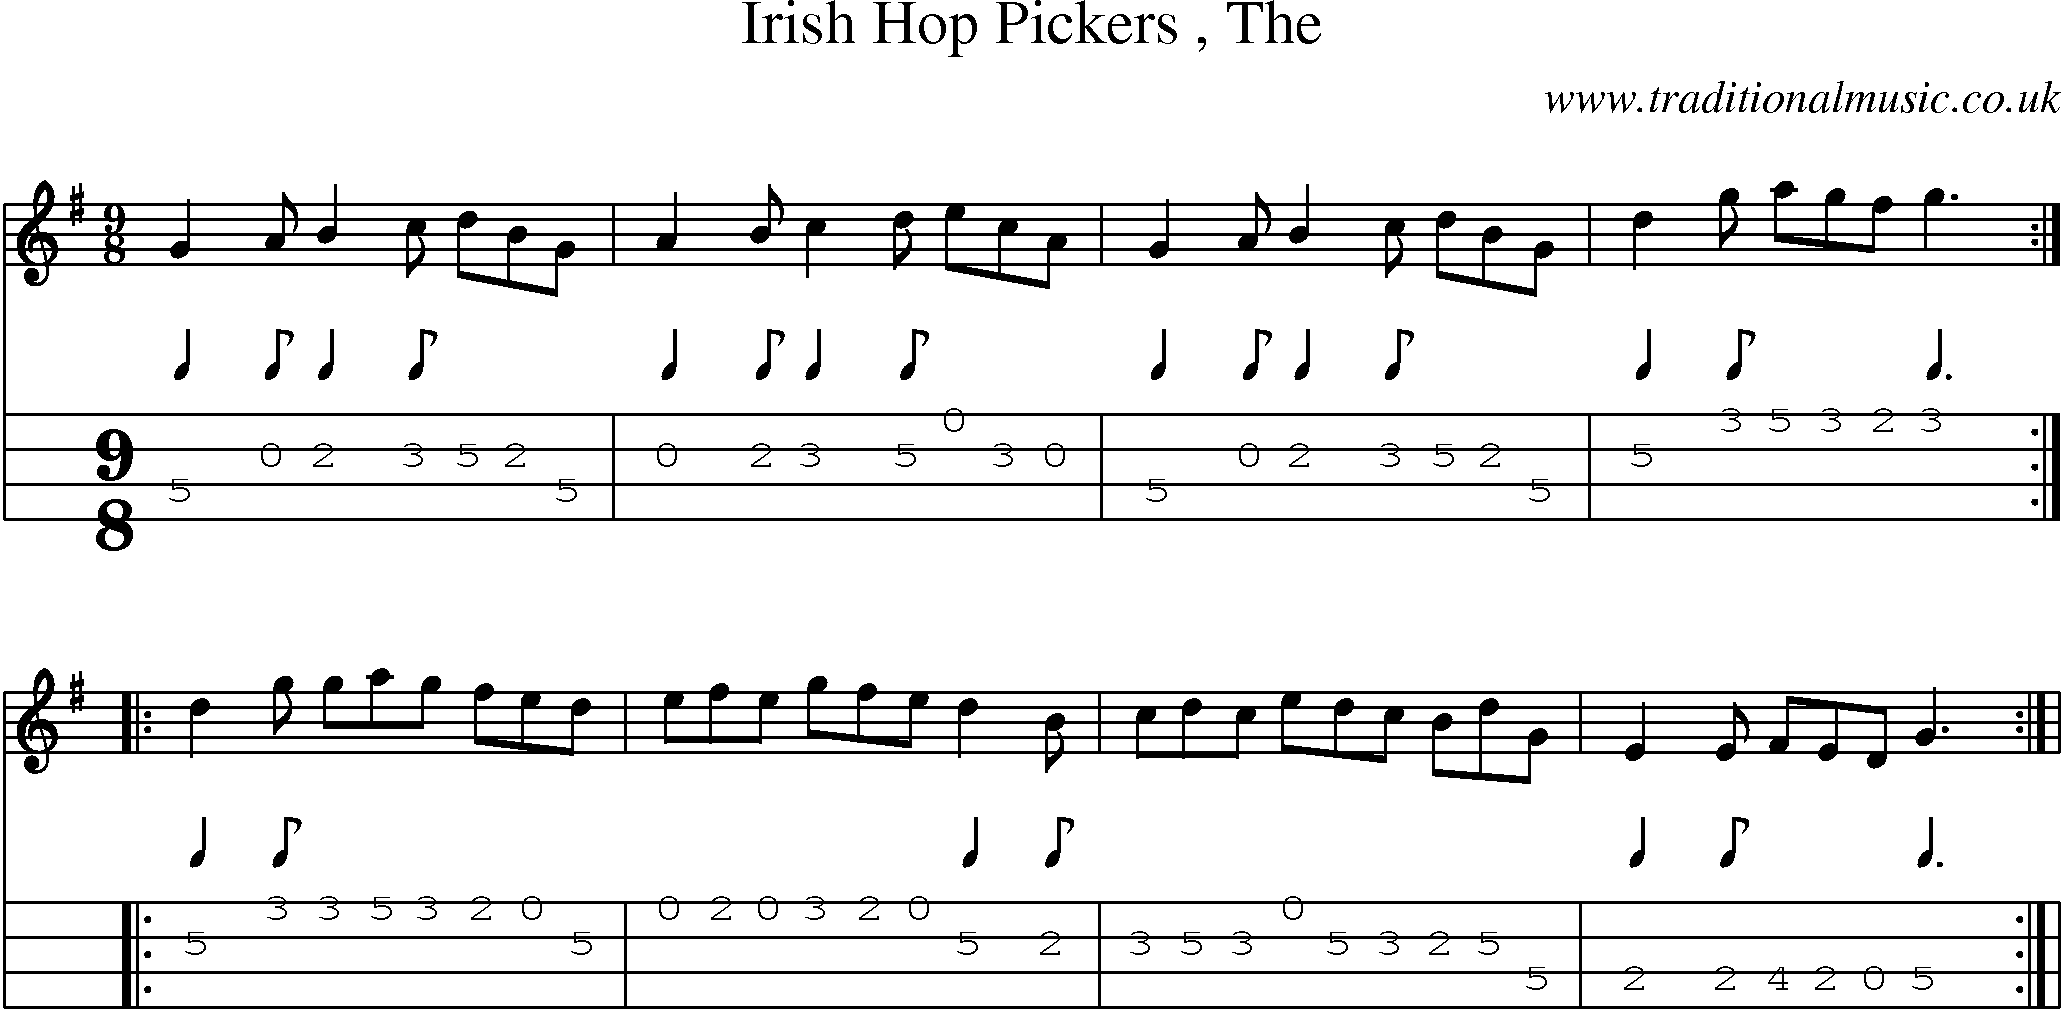 Music Score and Mandolin Tabs for Irish Hop Pickers